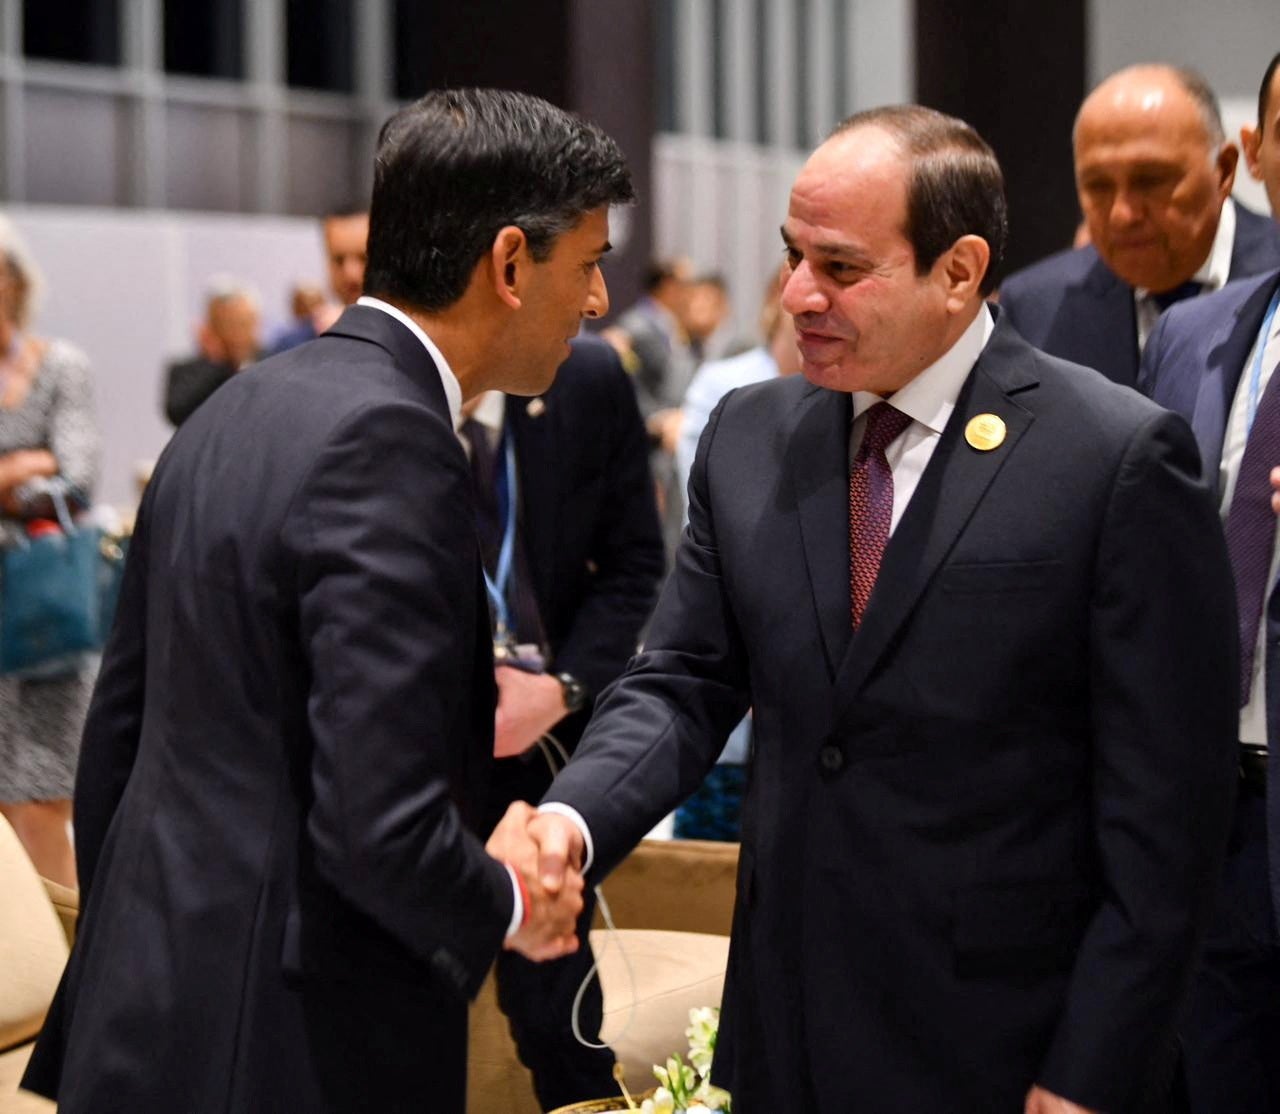 Rishi Sunak meets with Egyptian President Abdel Fattah al-Sisi during the Cop27 summit